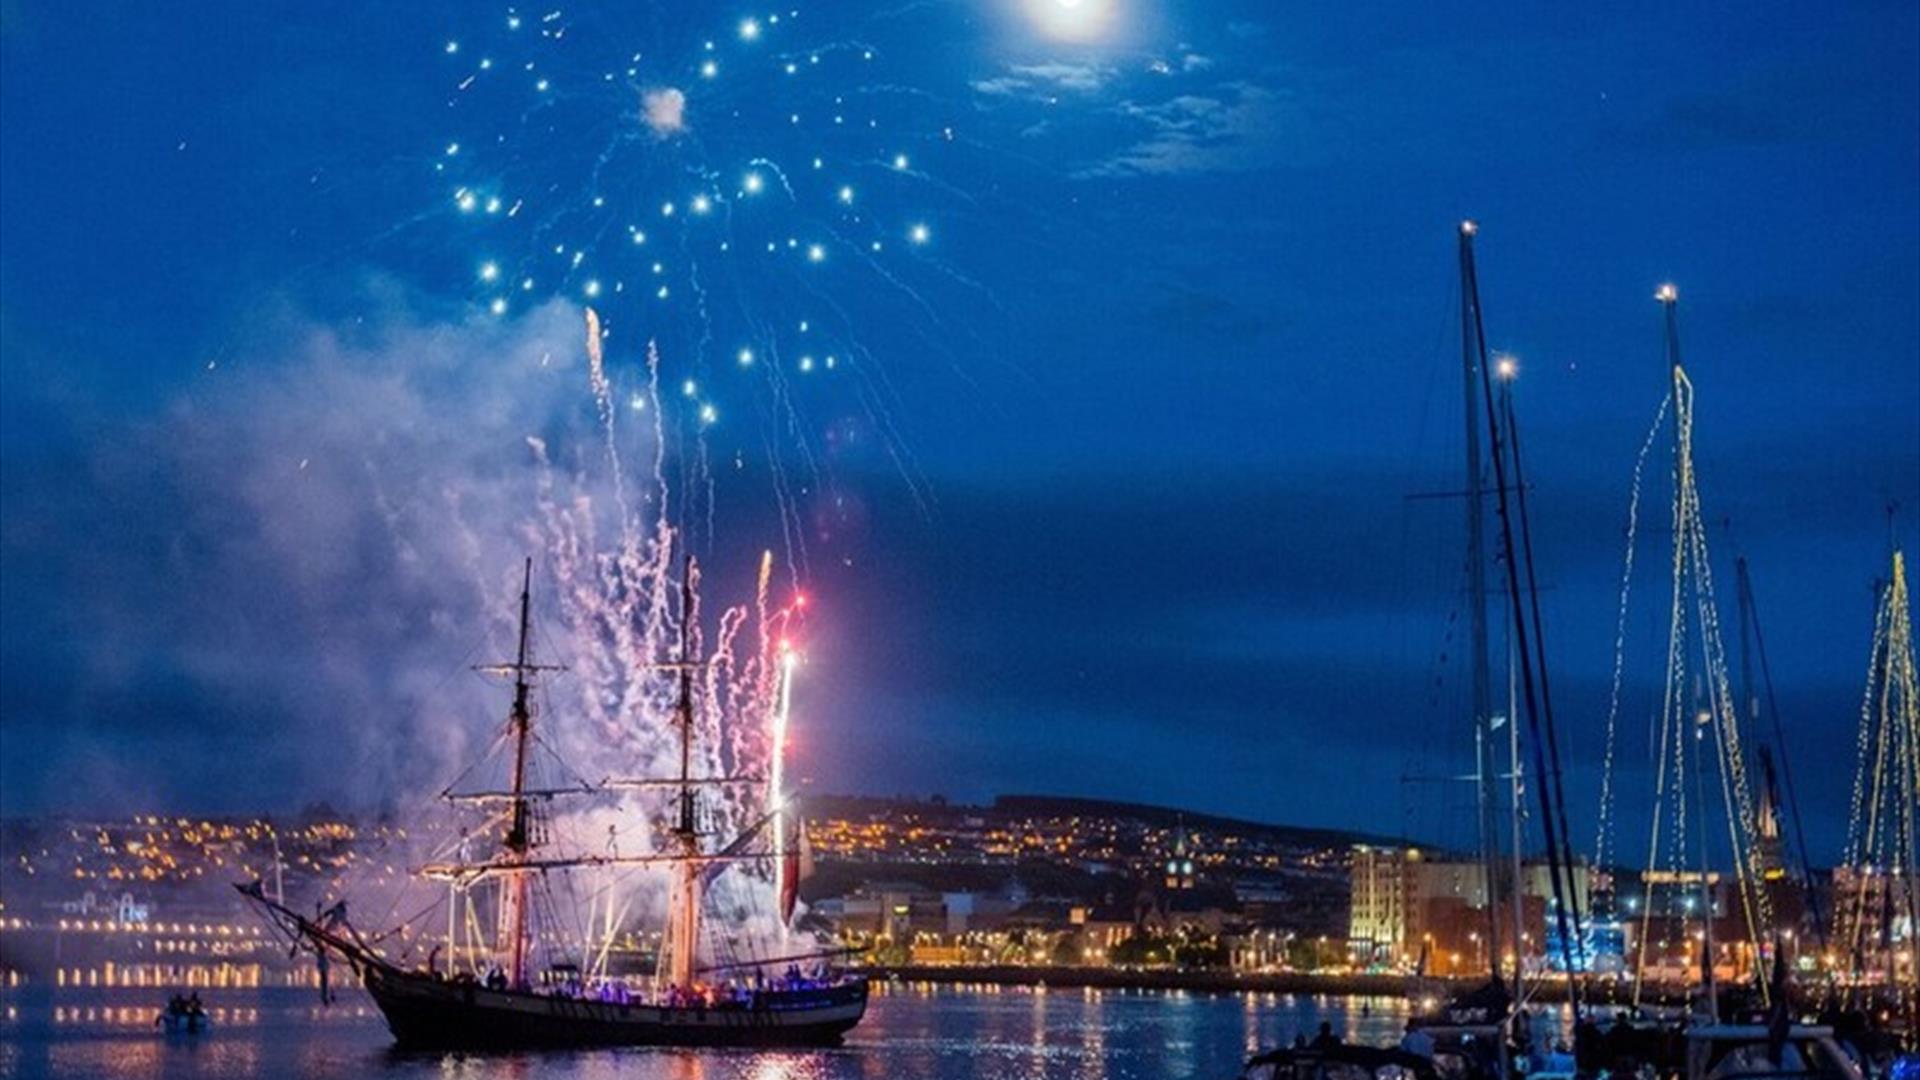 Foyle Maritime Festival: What Lies Beneath - A Celebration